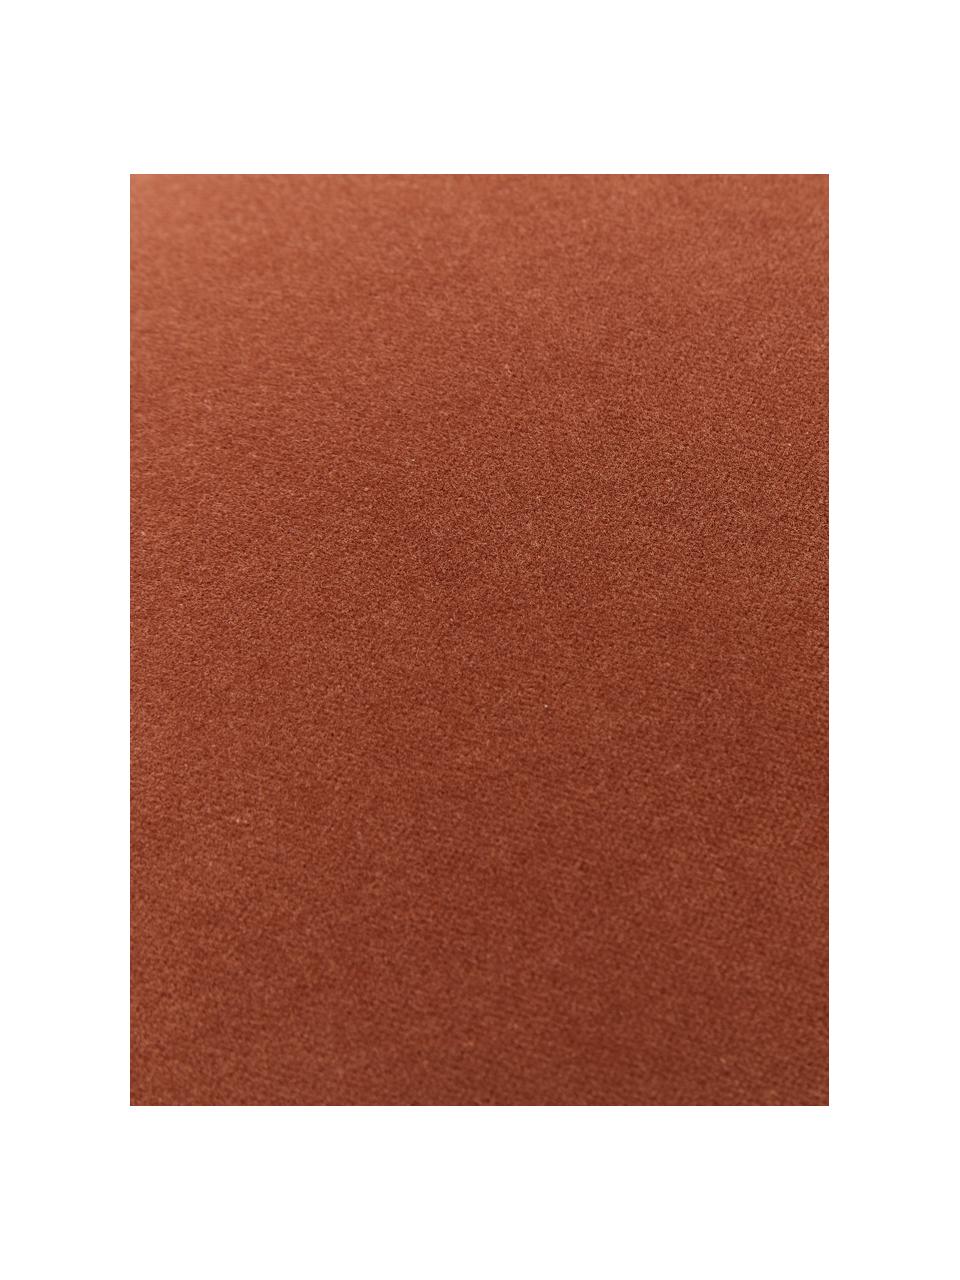 Effen fluwelen kussenhoes Dana in roodbruin, 100% katoenfluweel, Roodbruin, B 30 x L 50 cm